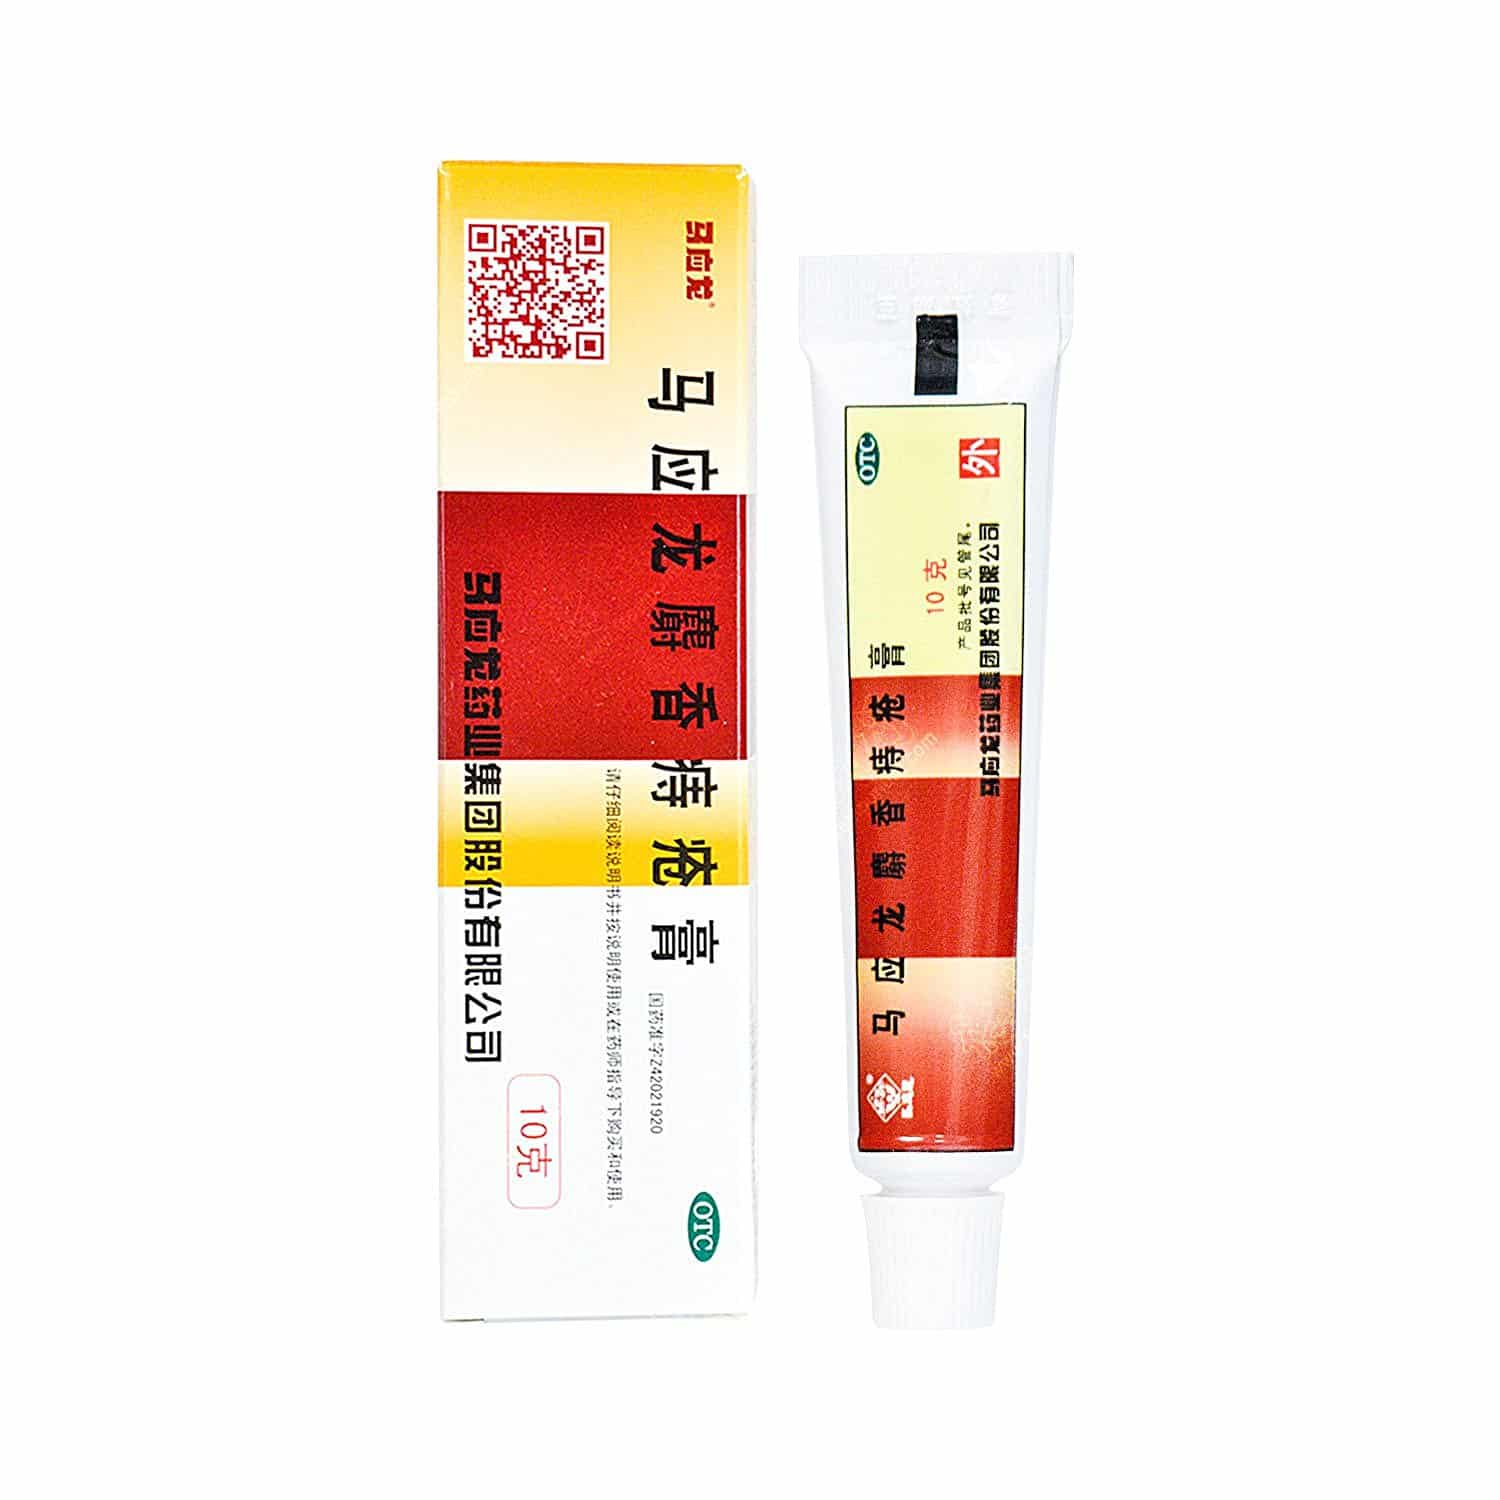 Ma Ying Long Hemorrhoids Ointment 0.35 oz (10g), 3 Packs